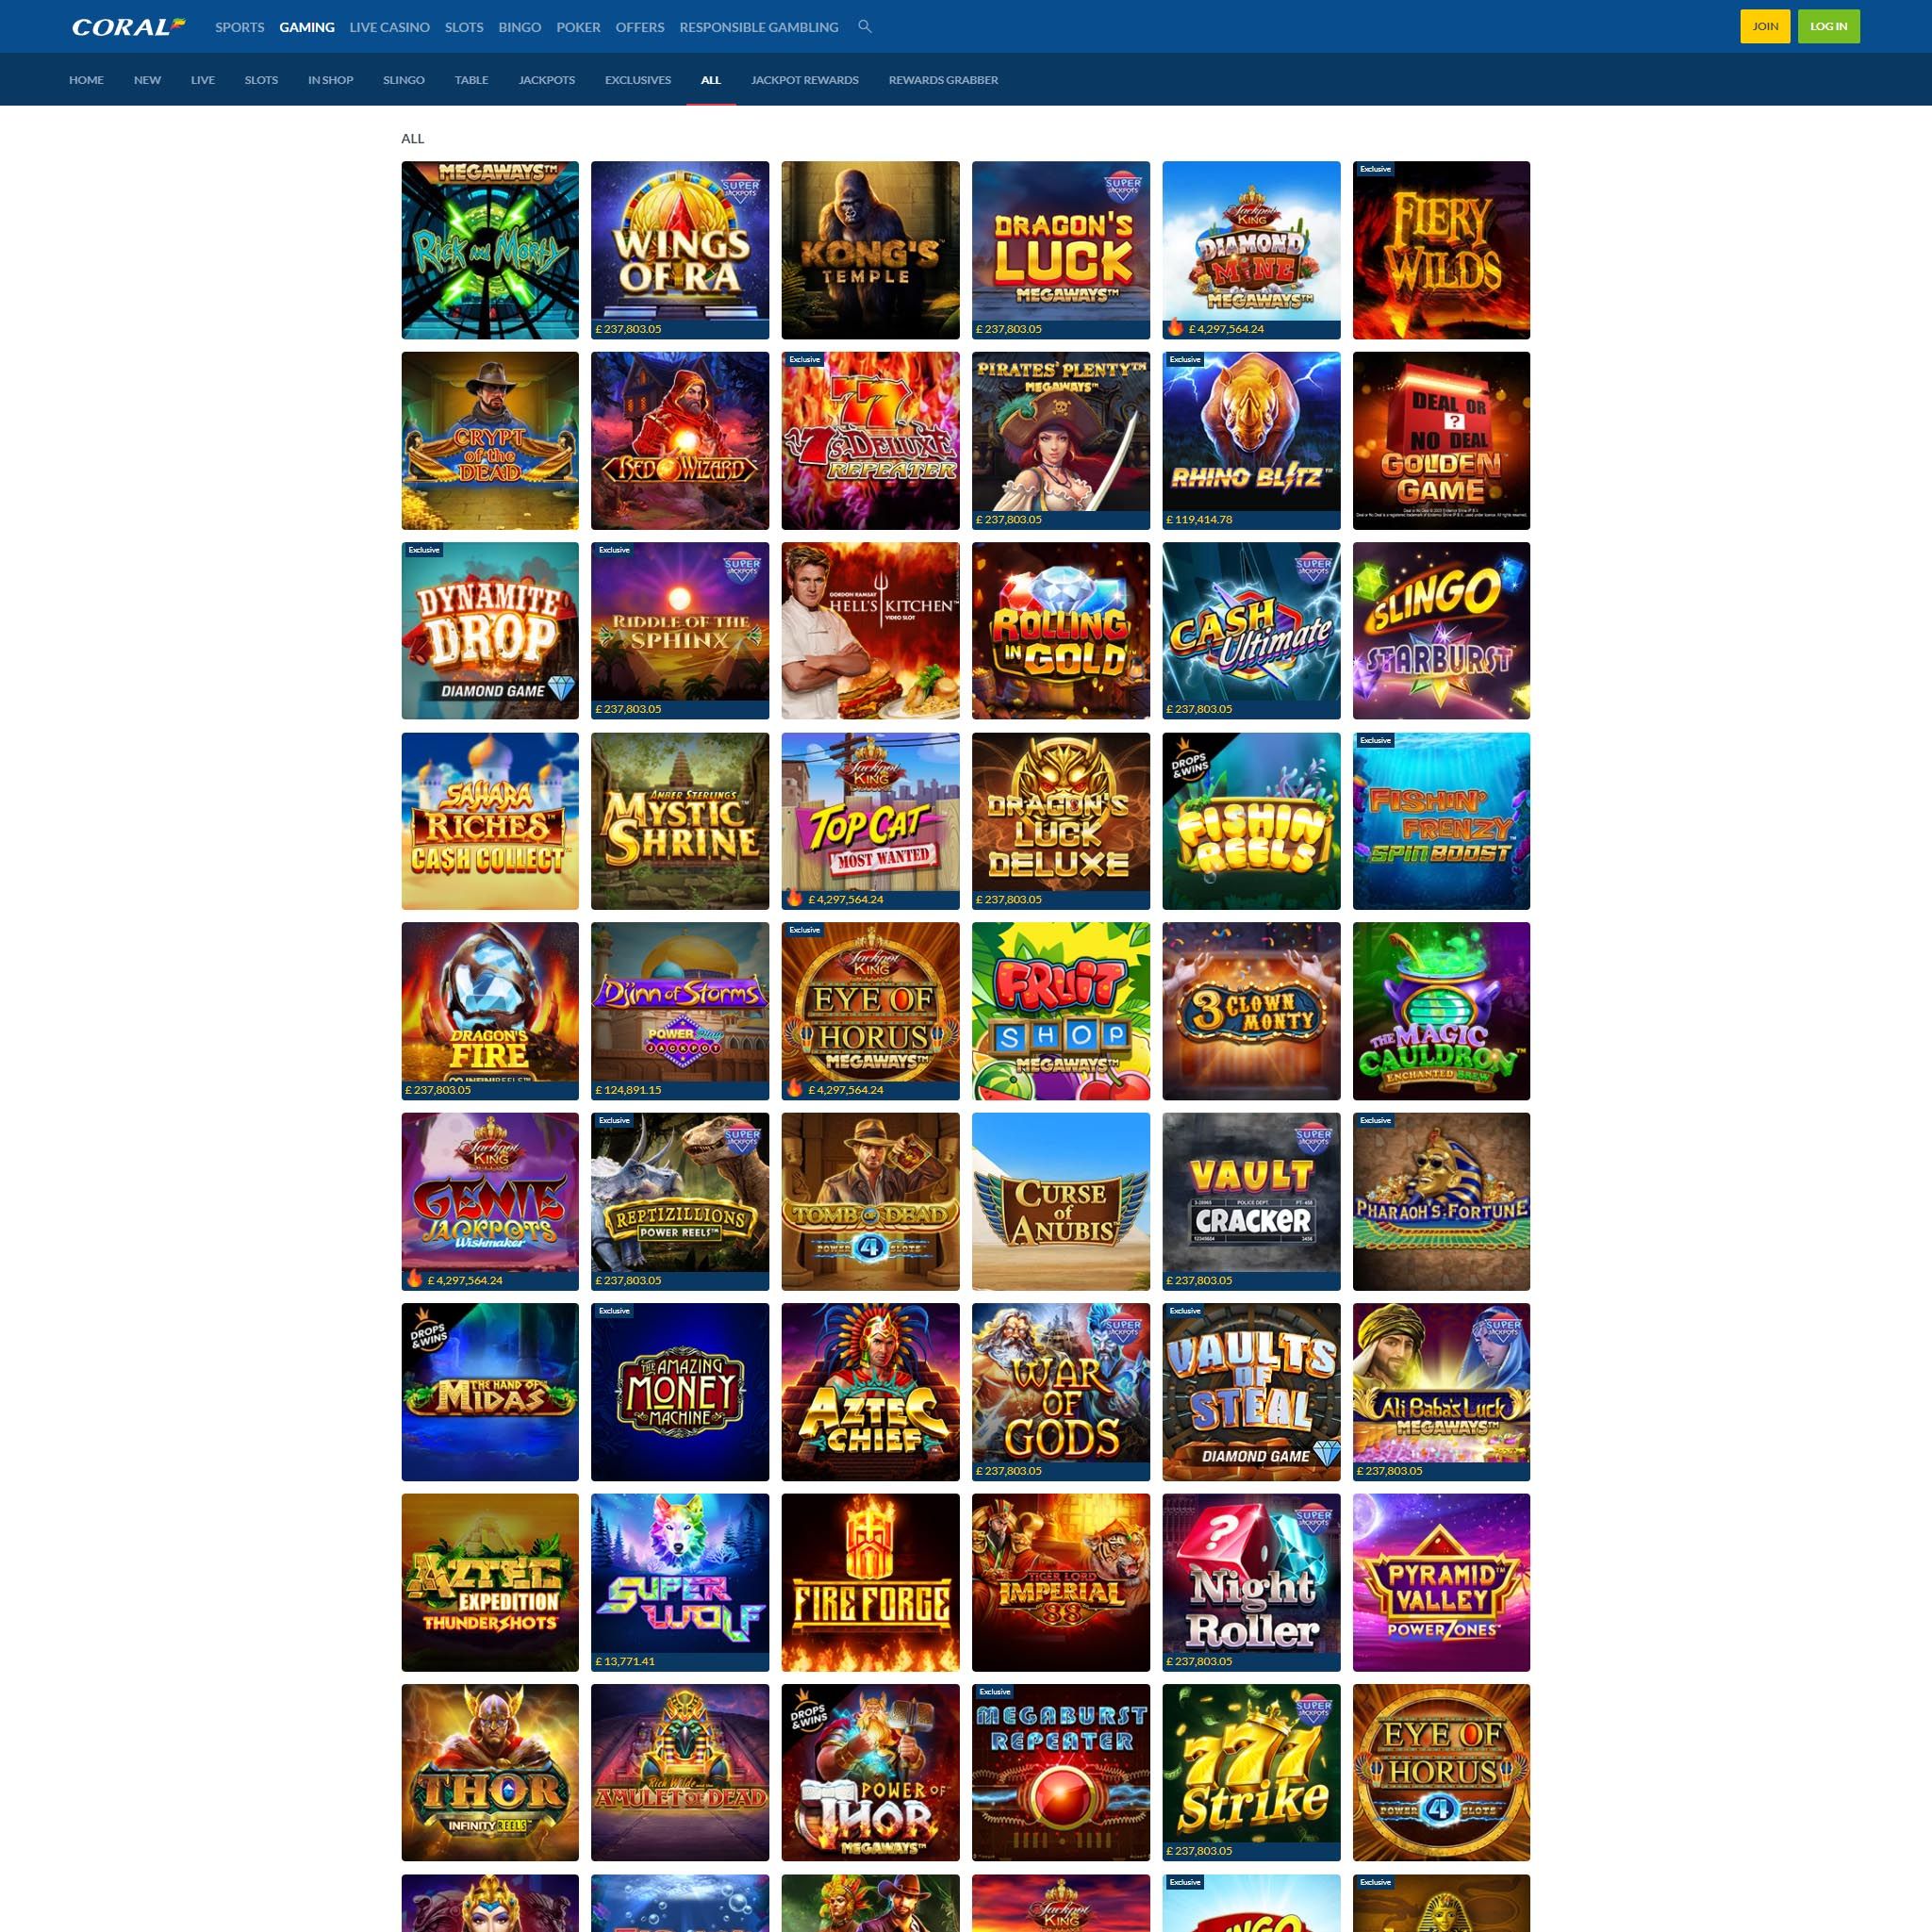 best online casinos for usa